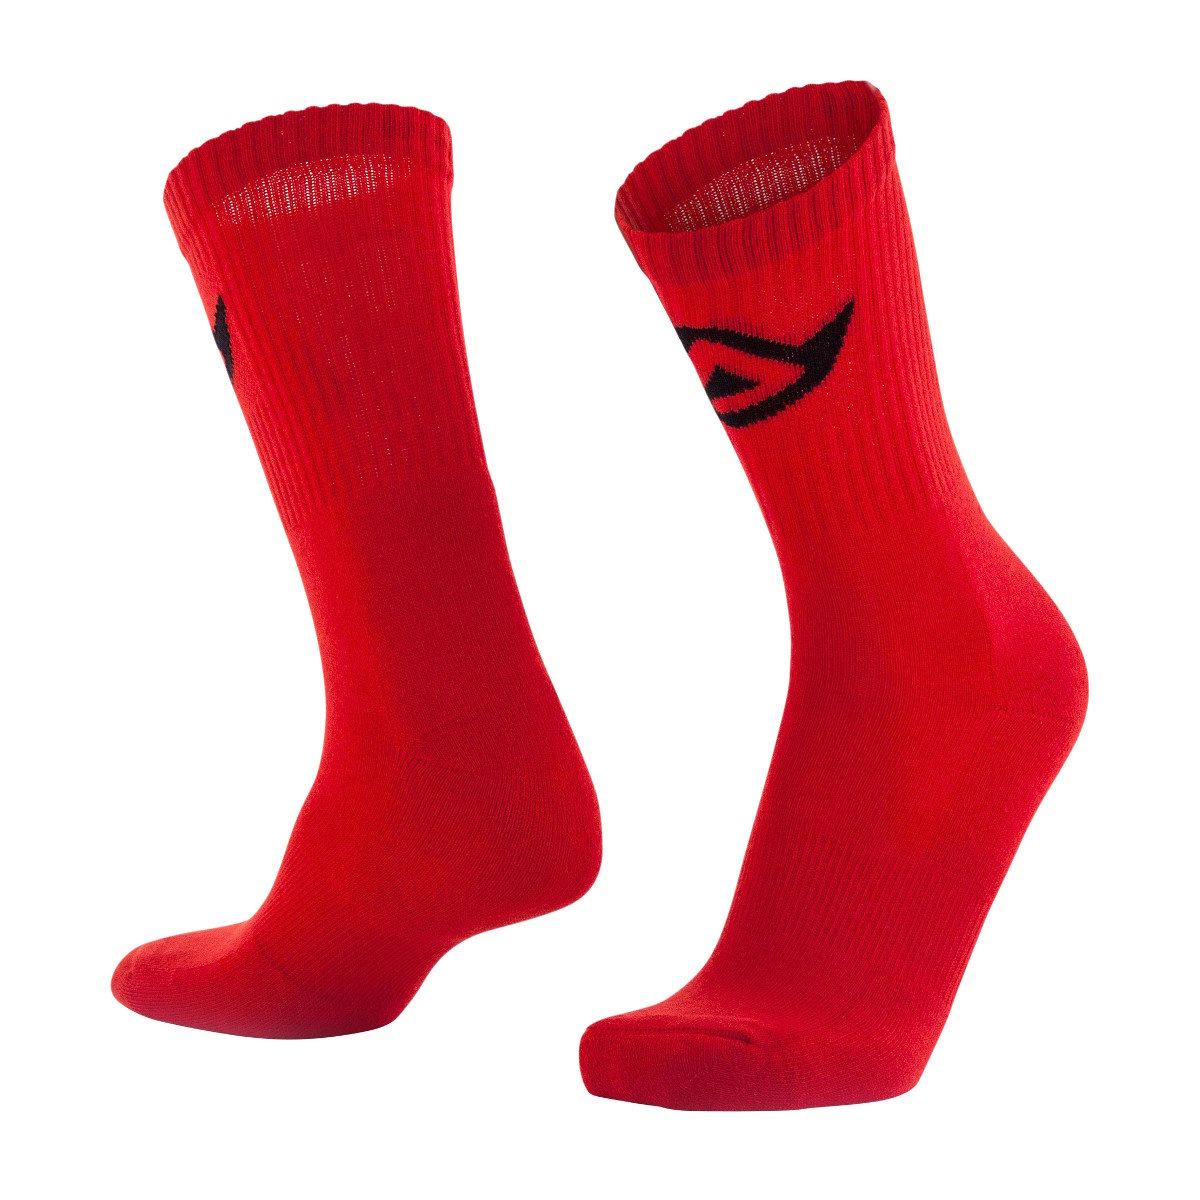 Acerbis Socks Cotton Red